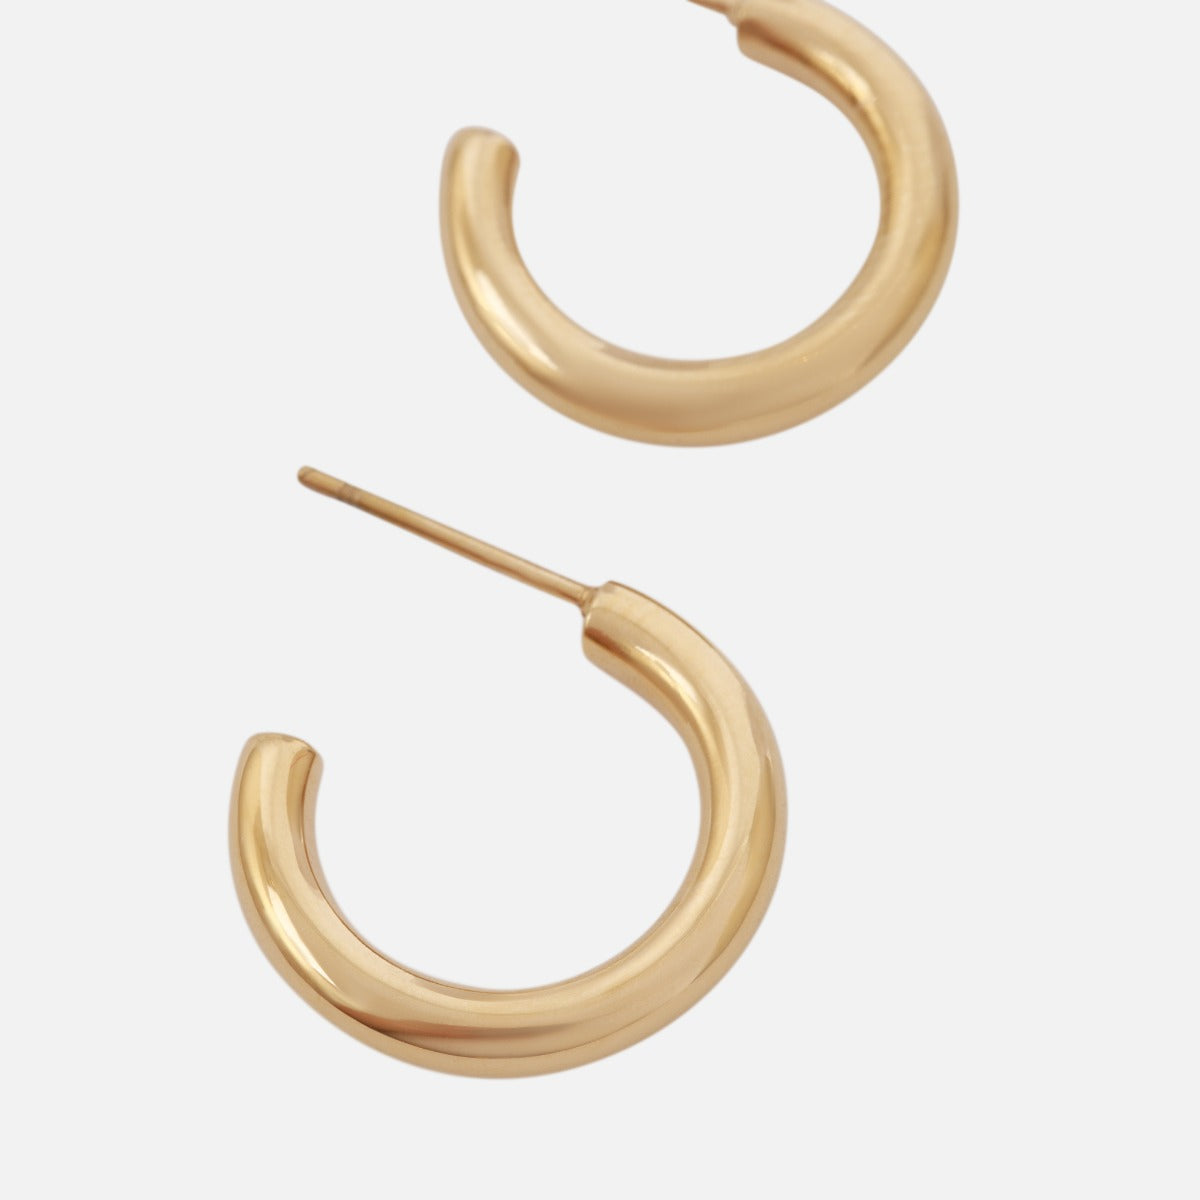 Thick golden stainless steel hoop earrings